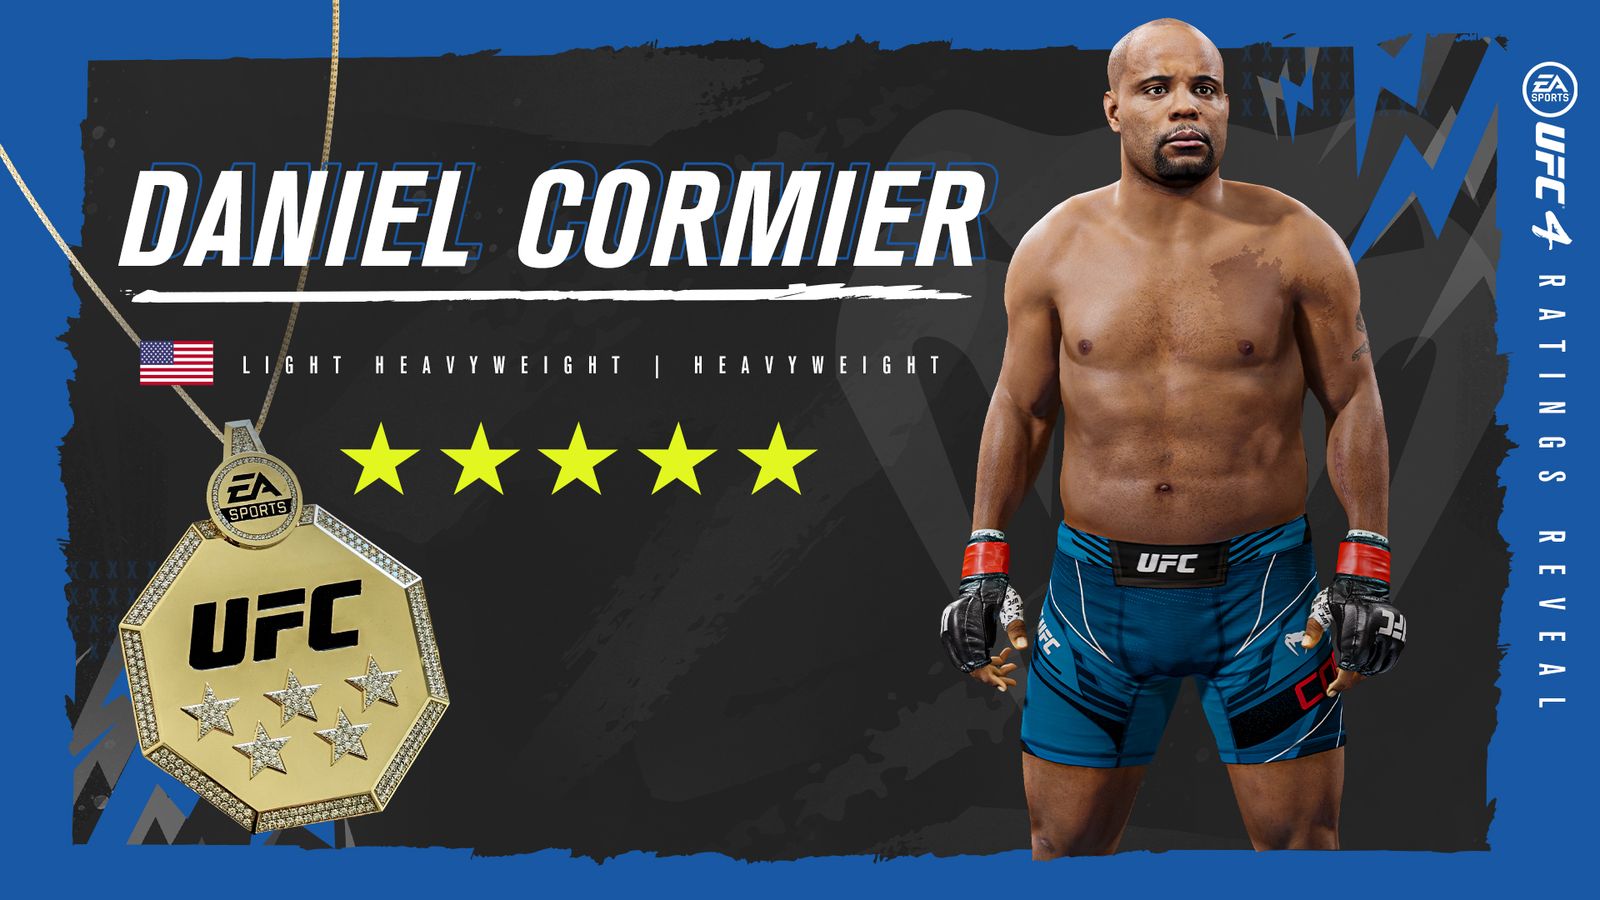 UFC 4 Daniel Cormier 5 star rating update